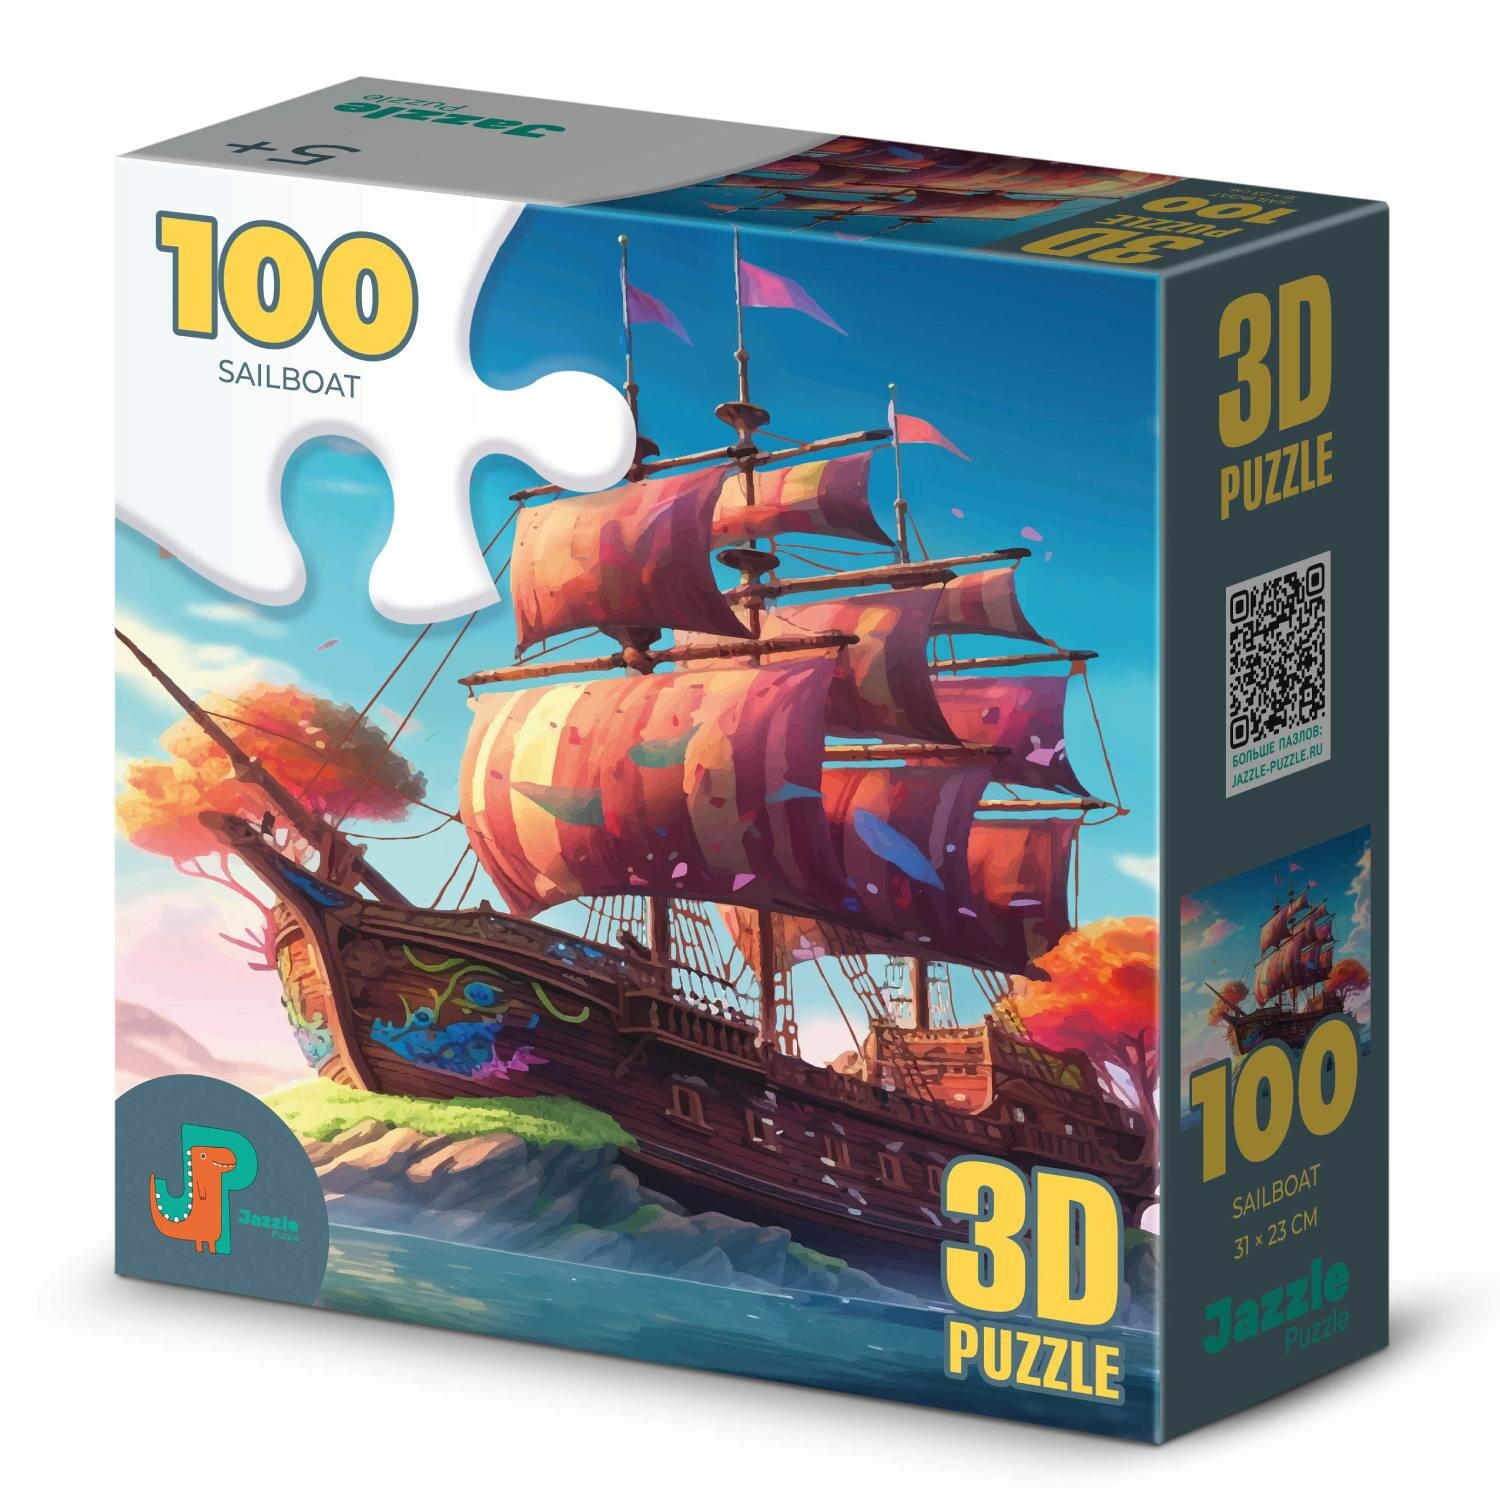 Пазл детский 3D Jazzle Puzzle 100 деталей: Парусник